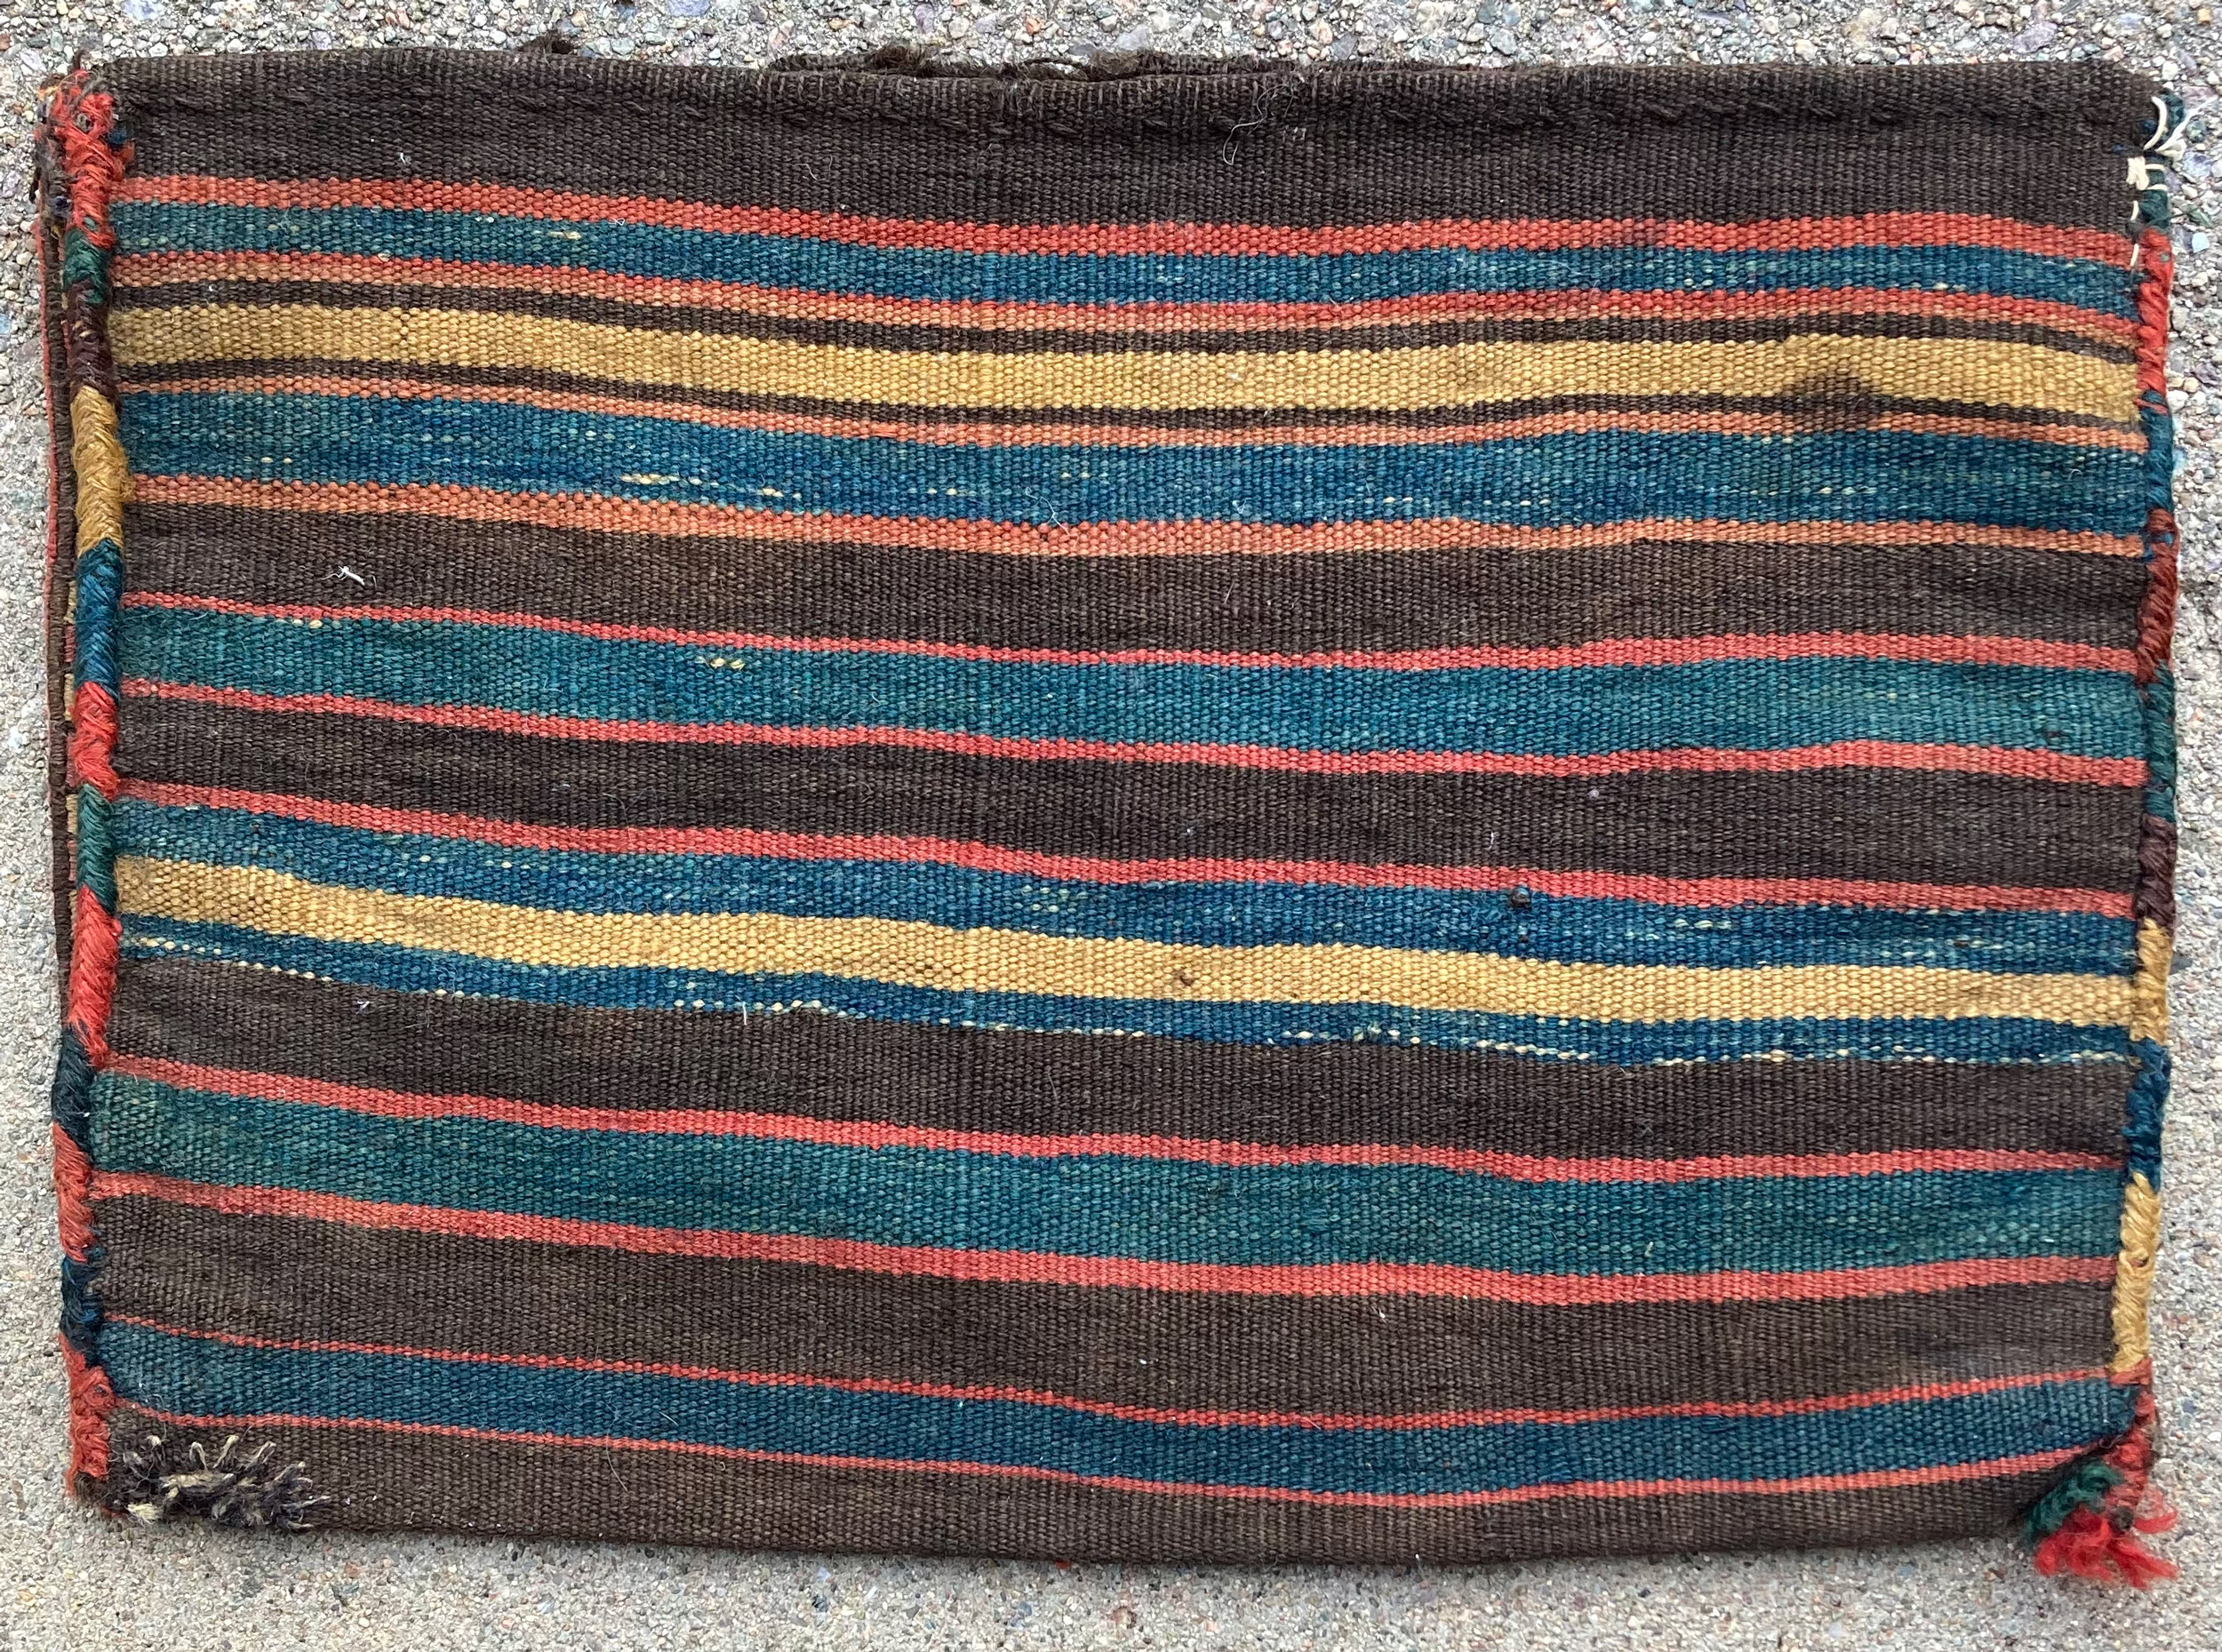 Striped flat woven kilim back from an antique Caucasian miniature Soumak technique bag with a blue field, Douglas Stock Gallery, antique collectable bags, bag faces